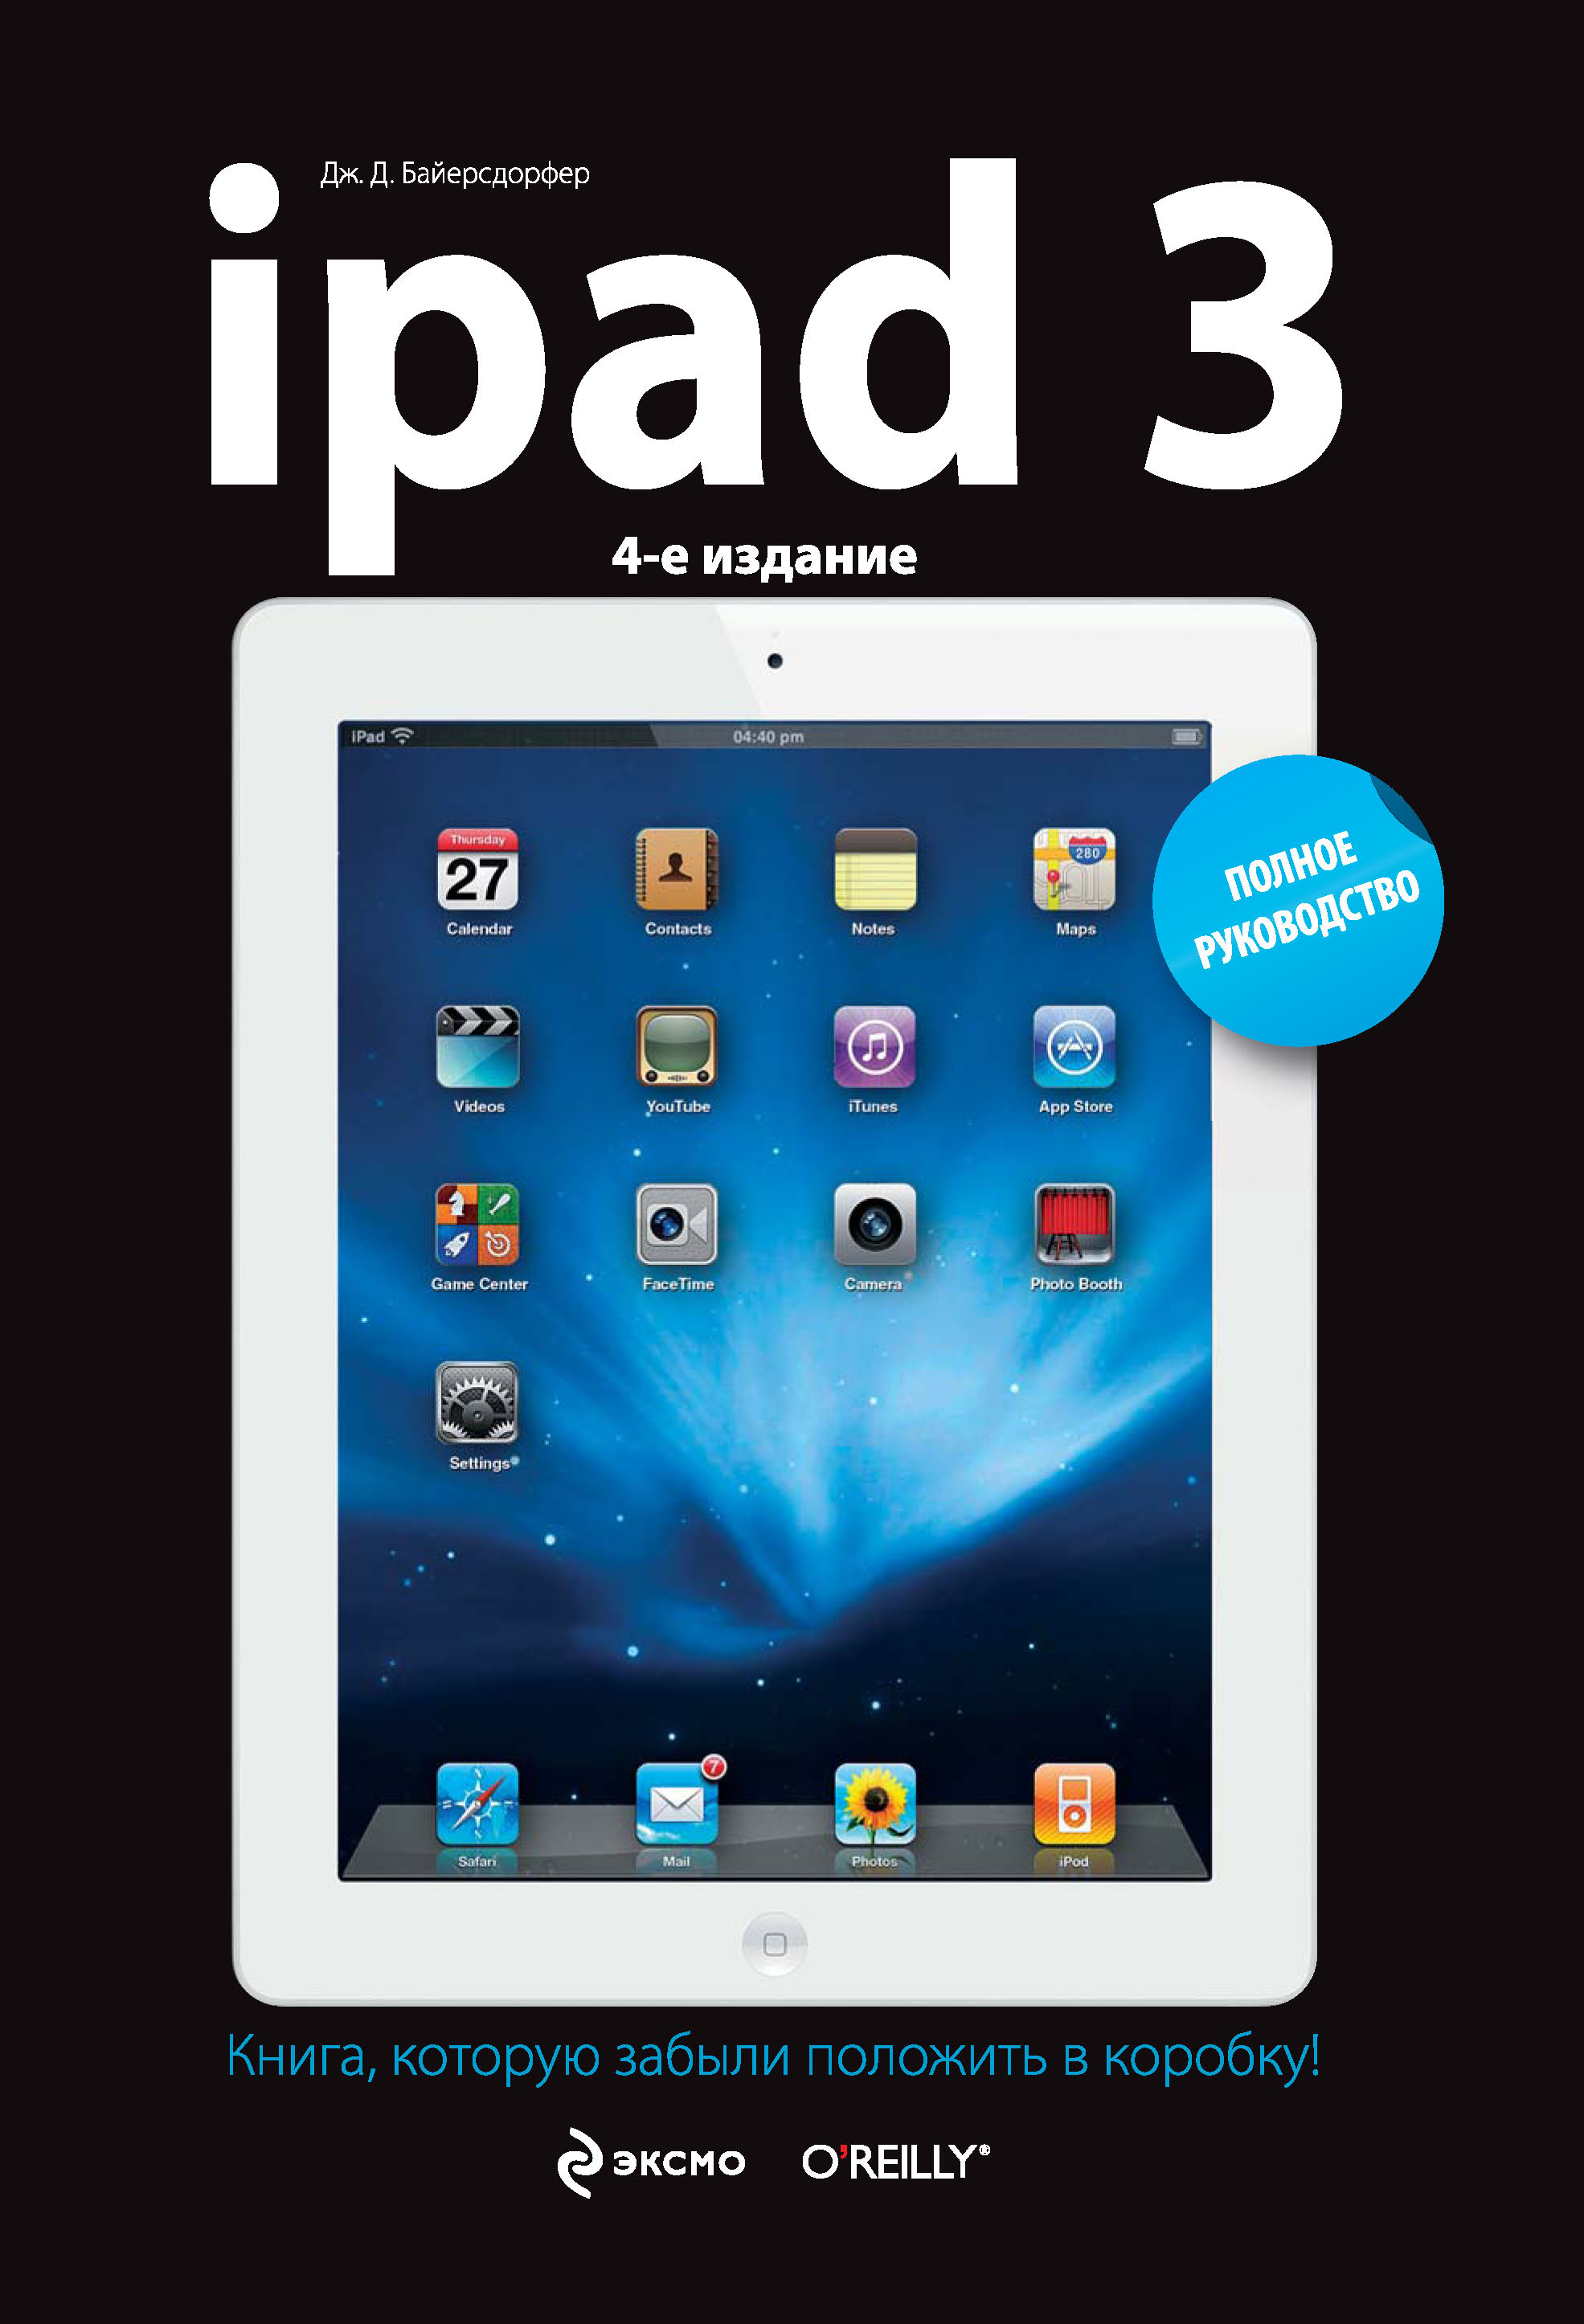 iPad3.Полное руководство